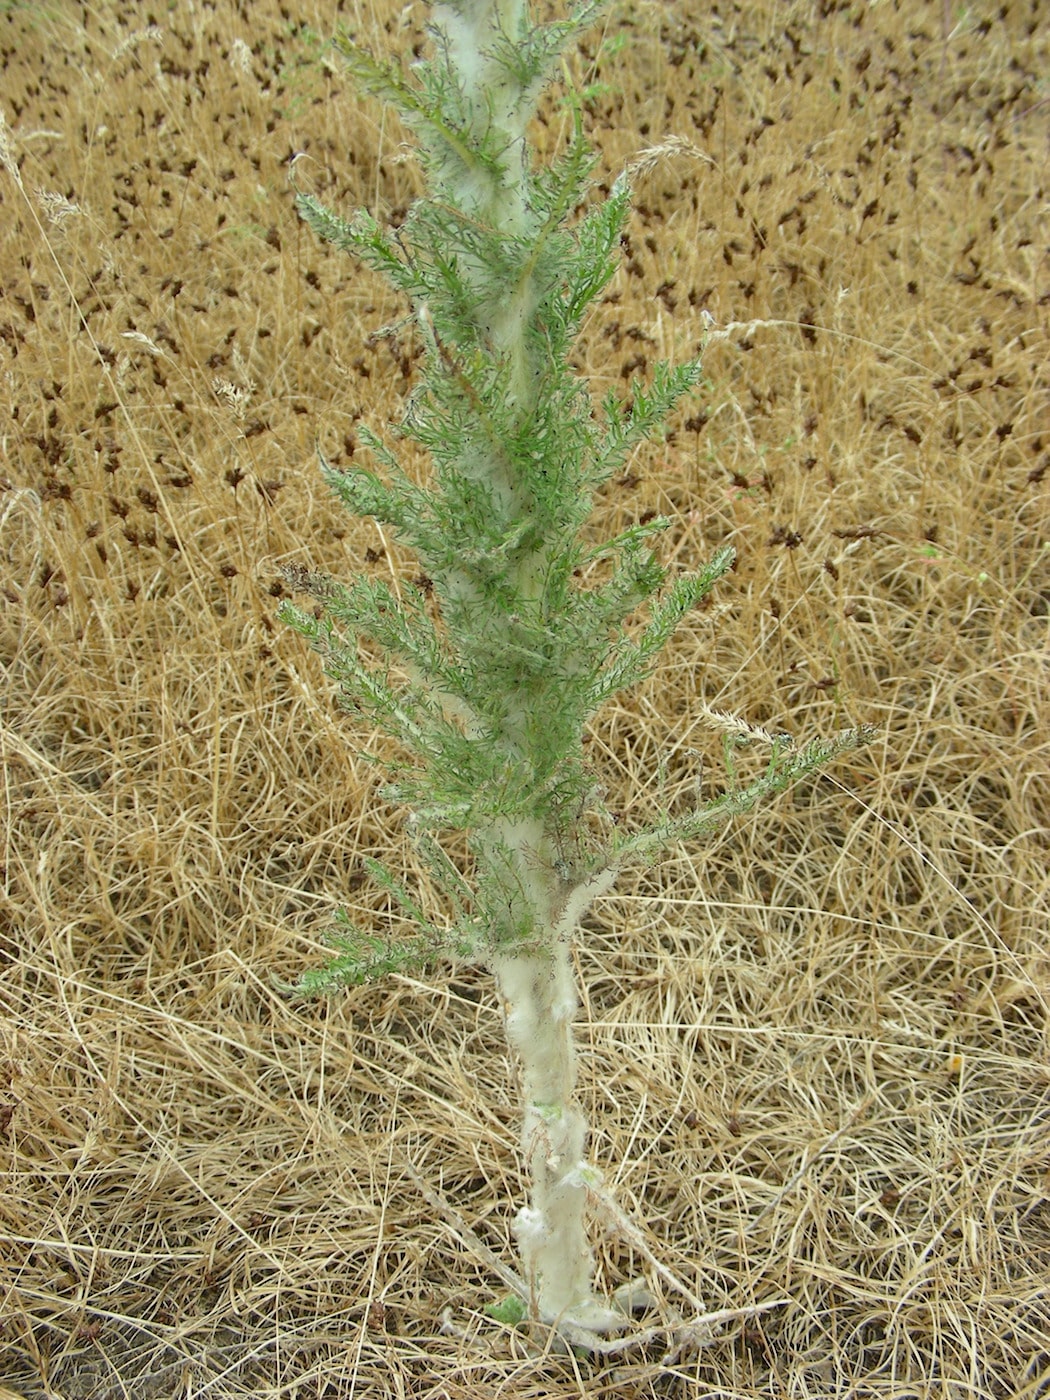 Image of Handelia trichophylla specimen.